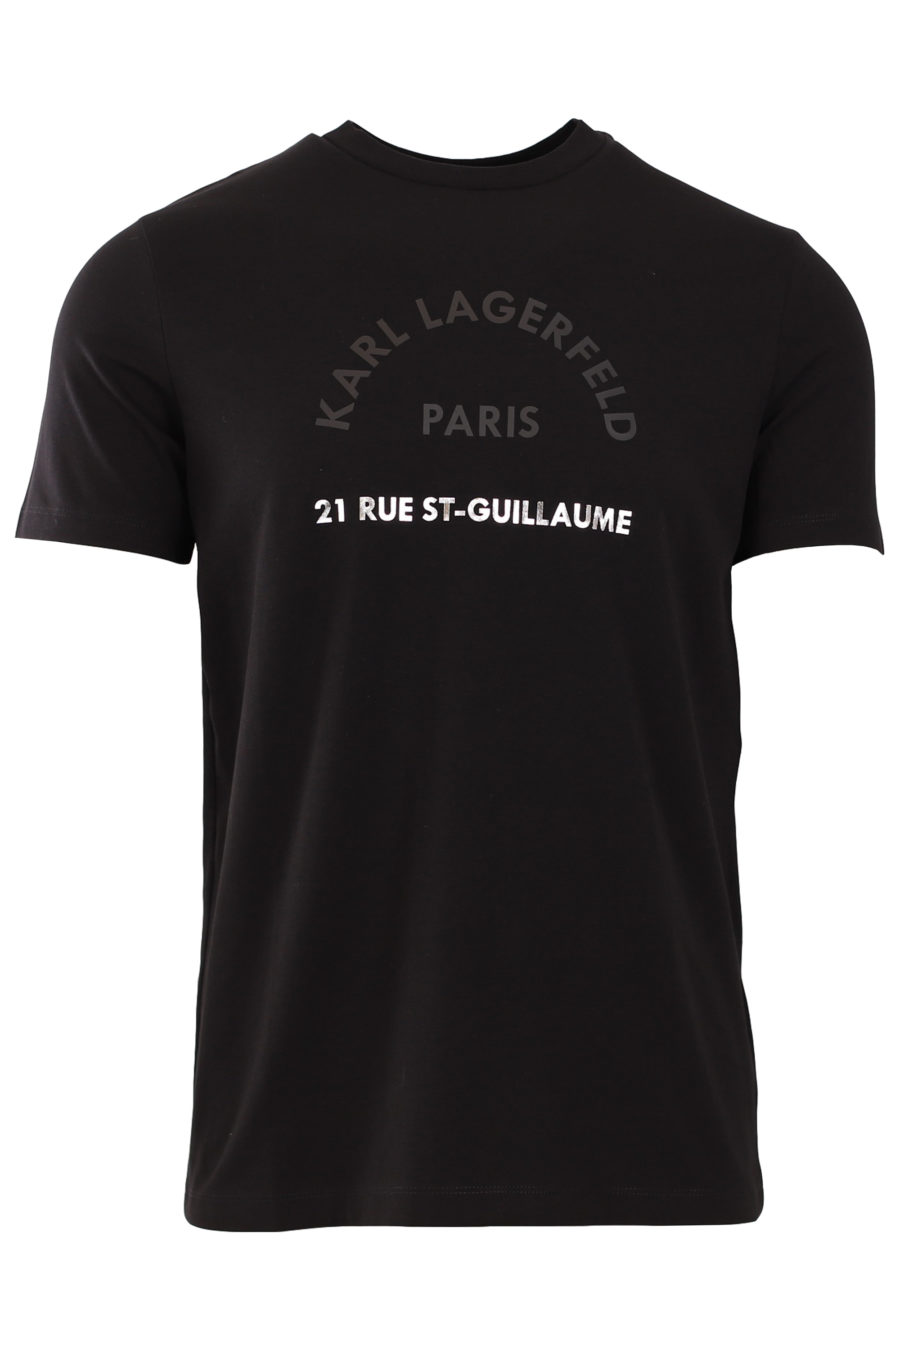 Schwarzes T-Shirt mit Logodruck - c581ca9607b5c0c60fb18241a3fd01fc864c04e8